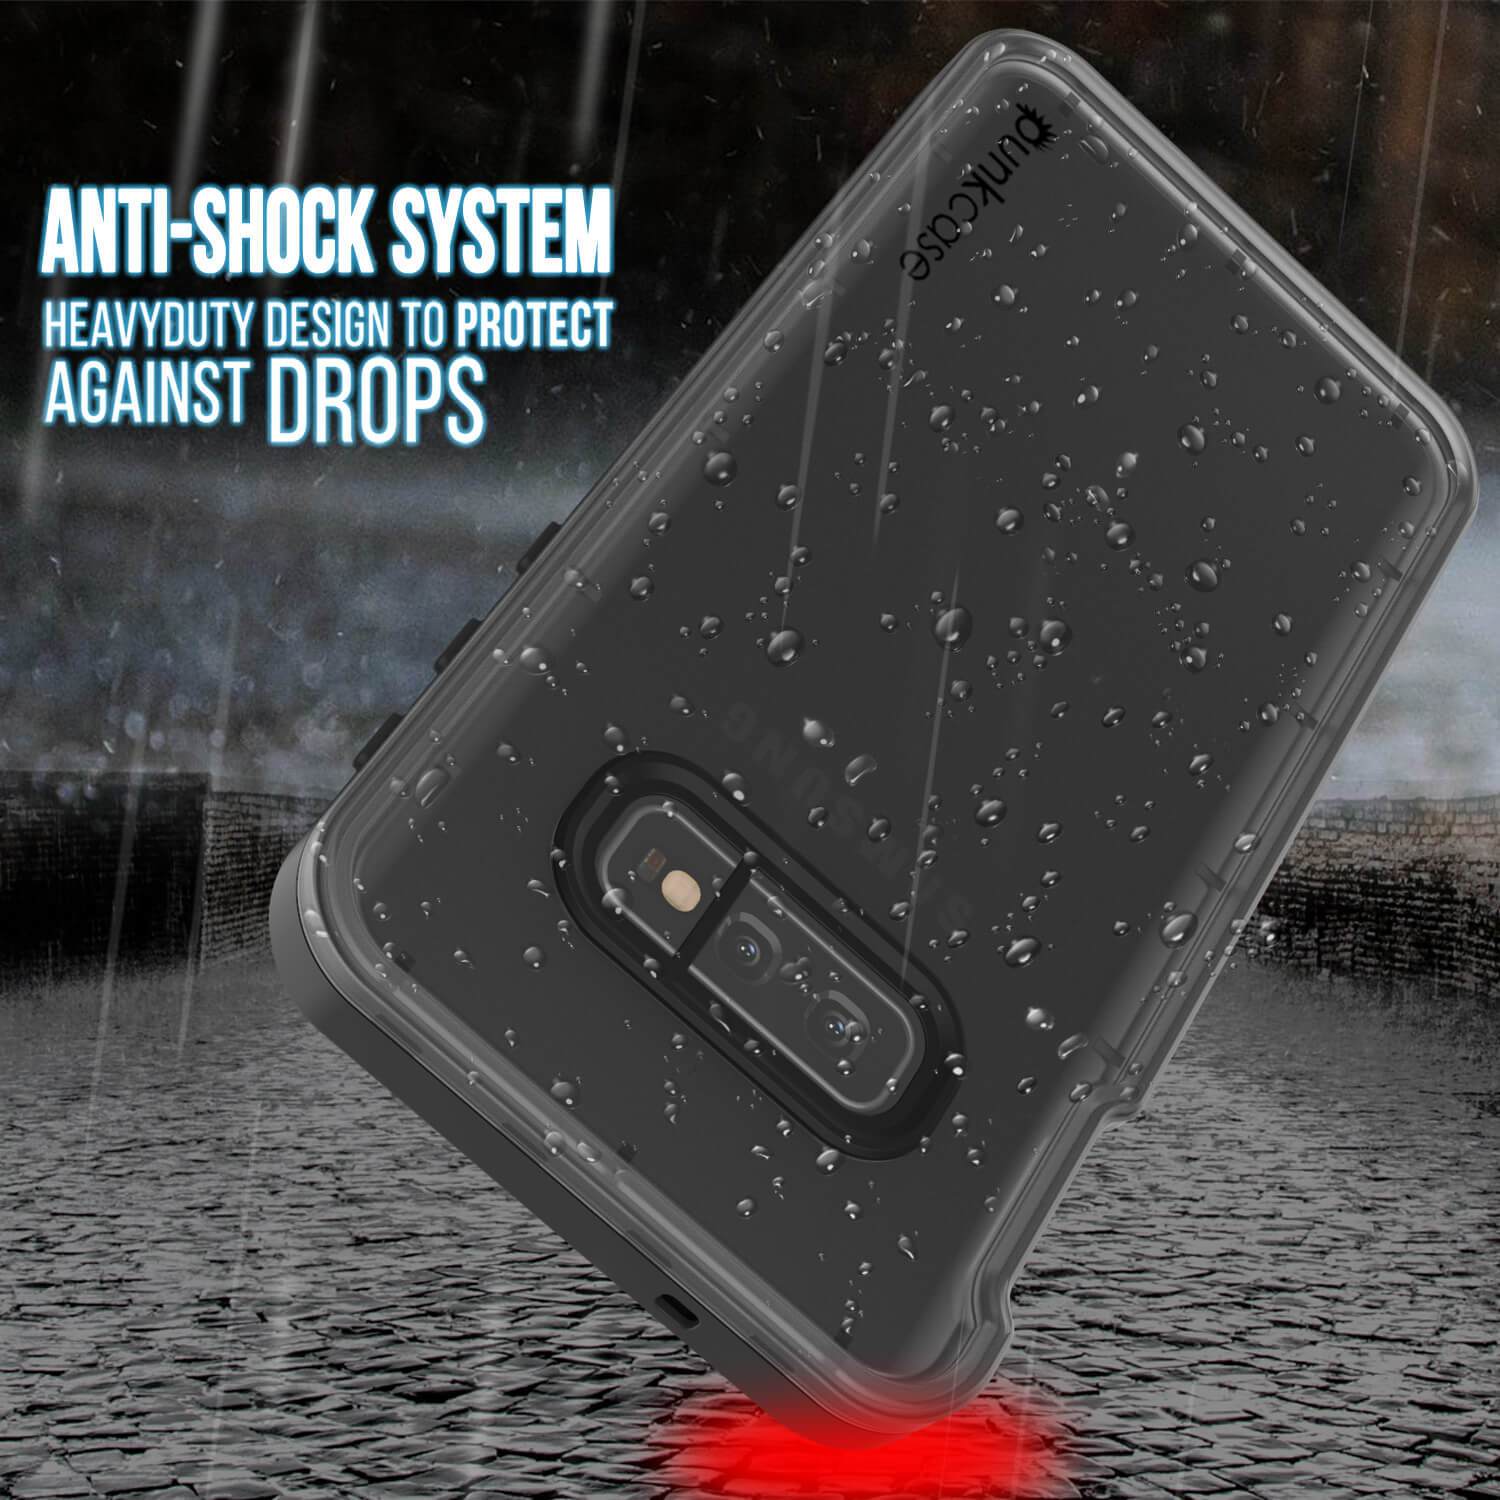 Galaxy S10e Waterproof Case PunkCase StudStar Black Thin 6.6ft Underwater IP68 Shock/Snow Proof